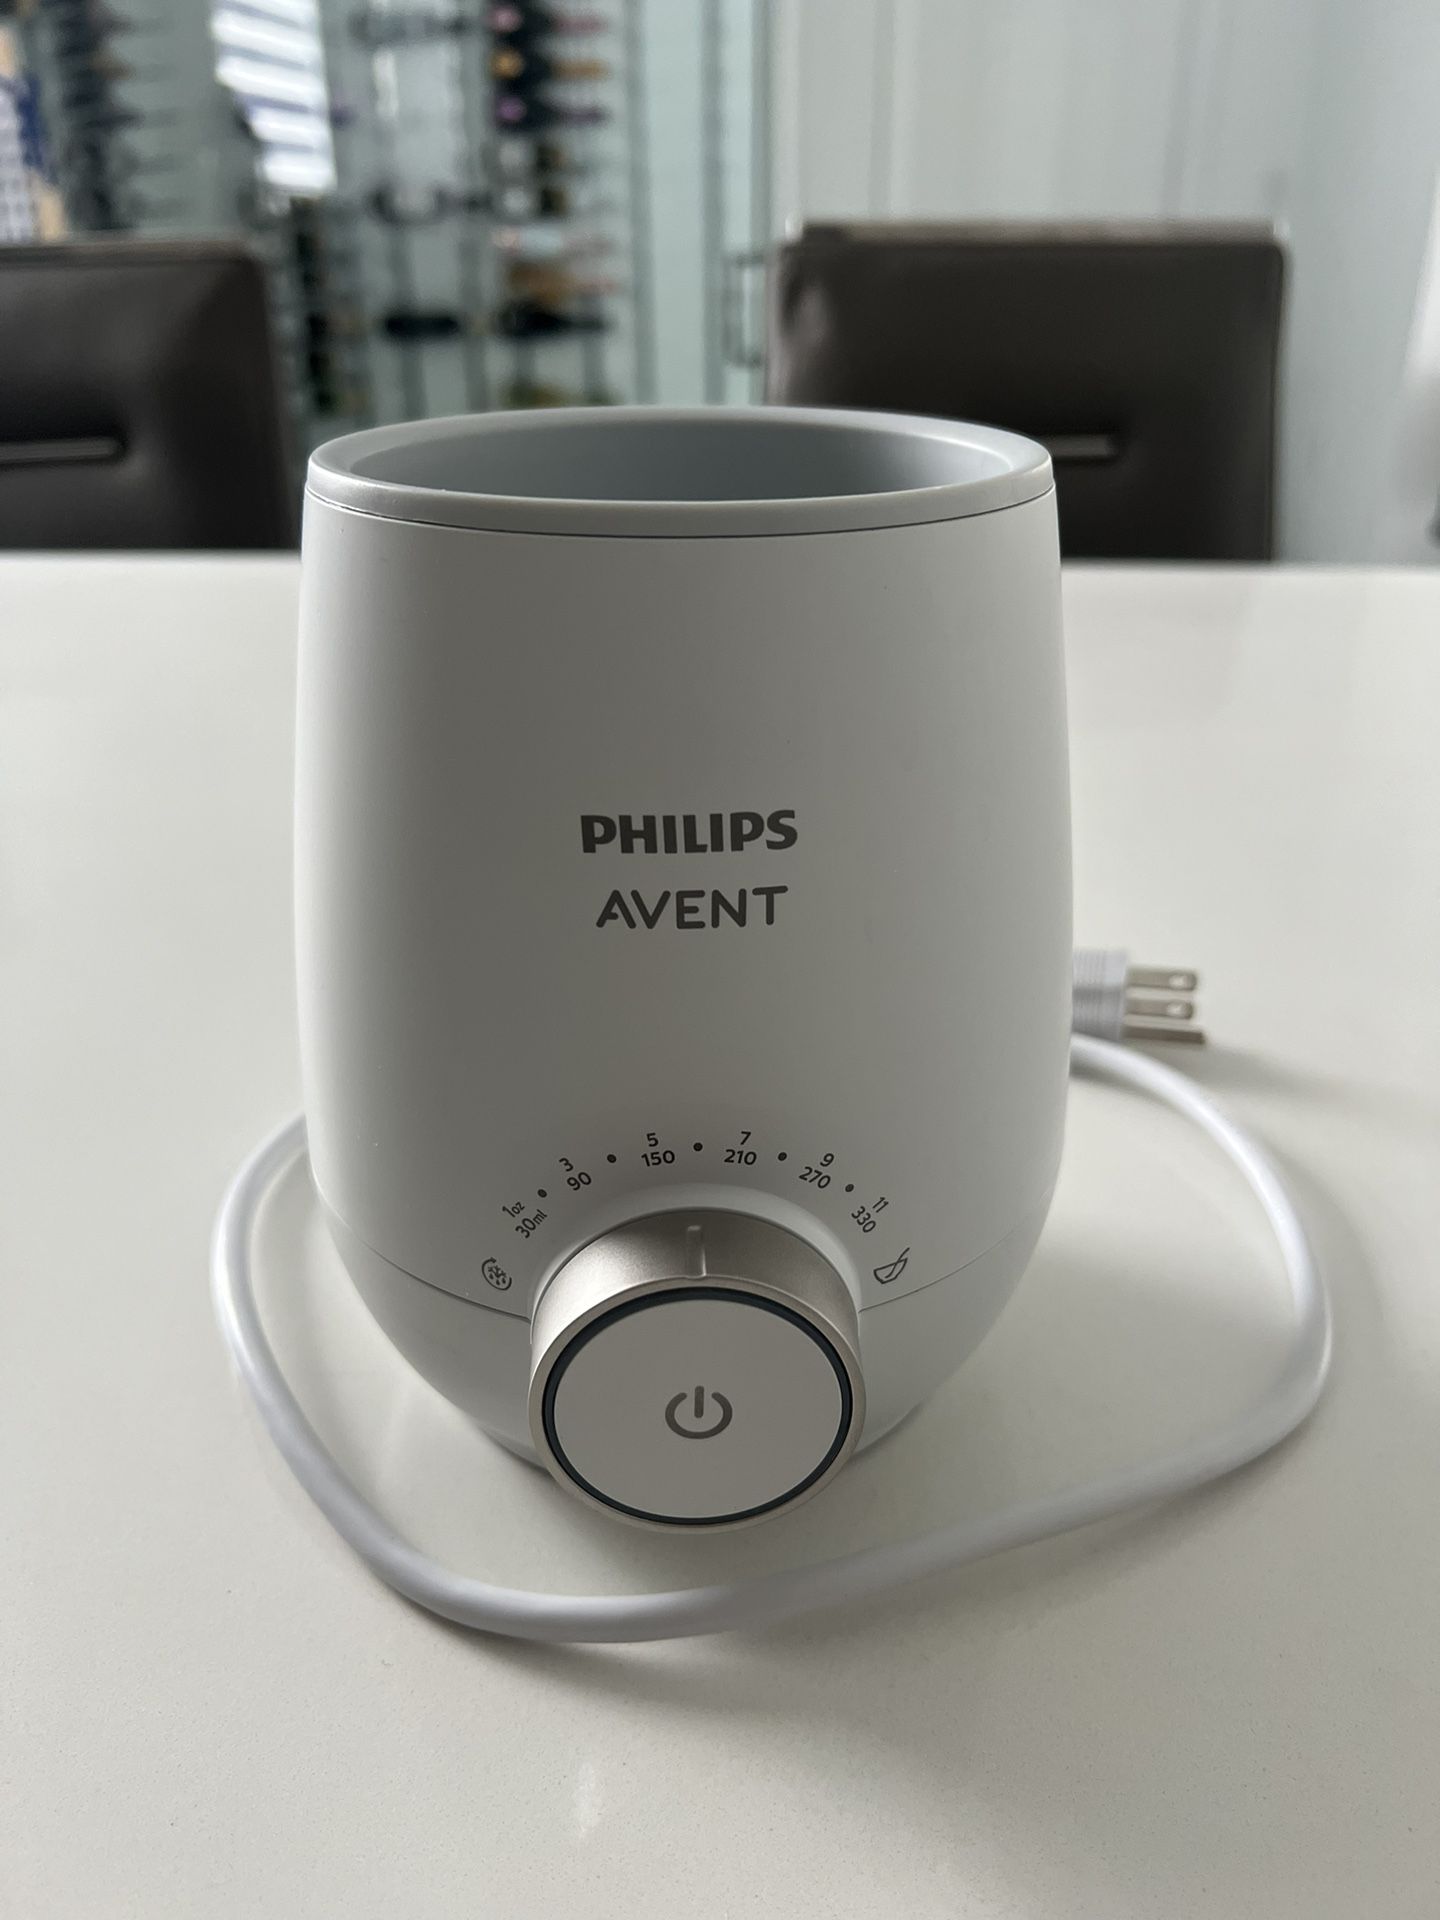 Philips Avent Premium Fast bottle warmer